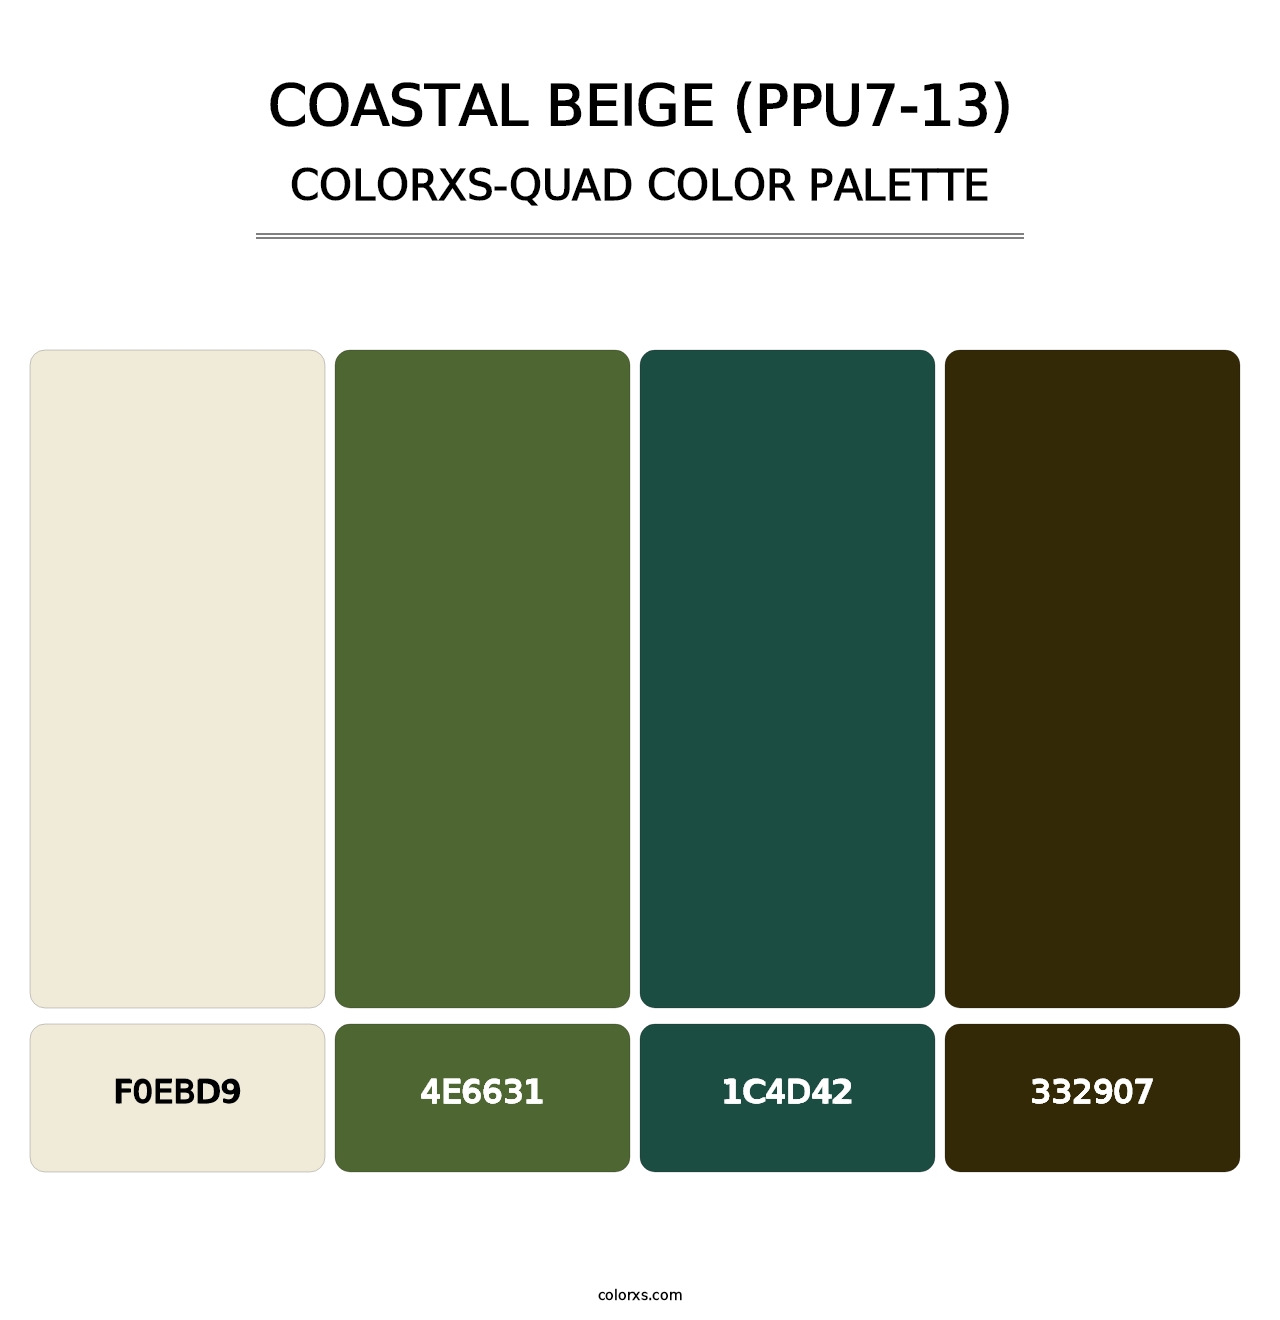 Coastal Beige (PPU7-13) - Colorxs Quad Palette